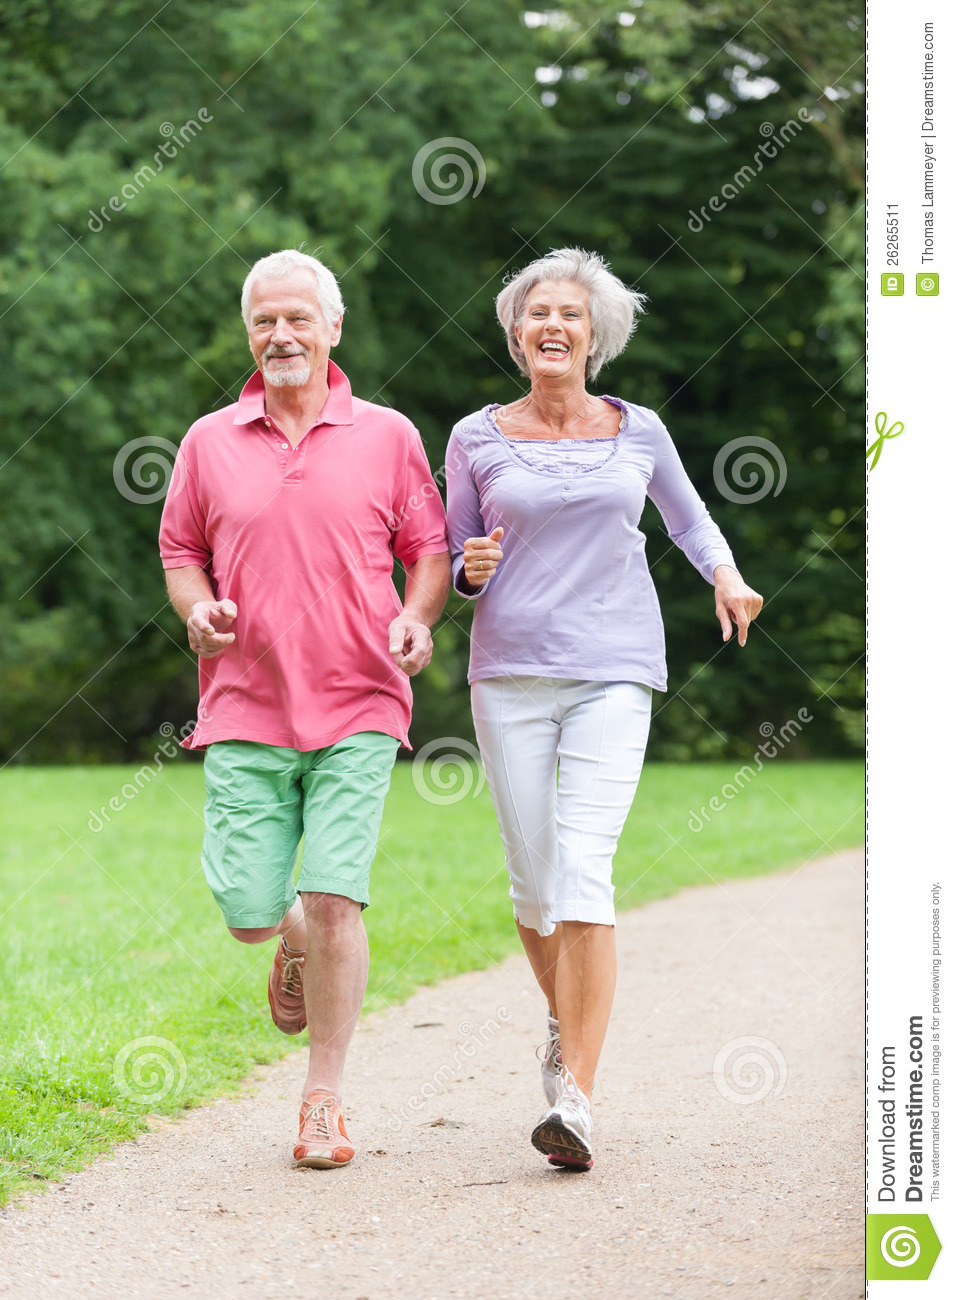 Active Seniors Stock Image   Image  26265511